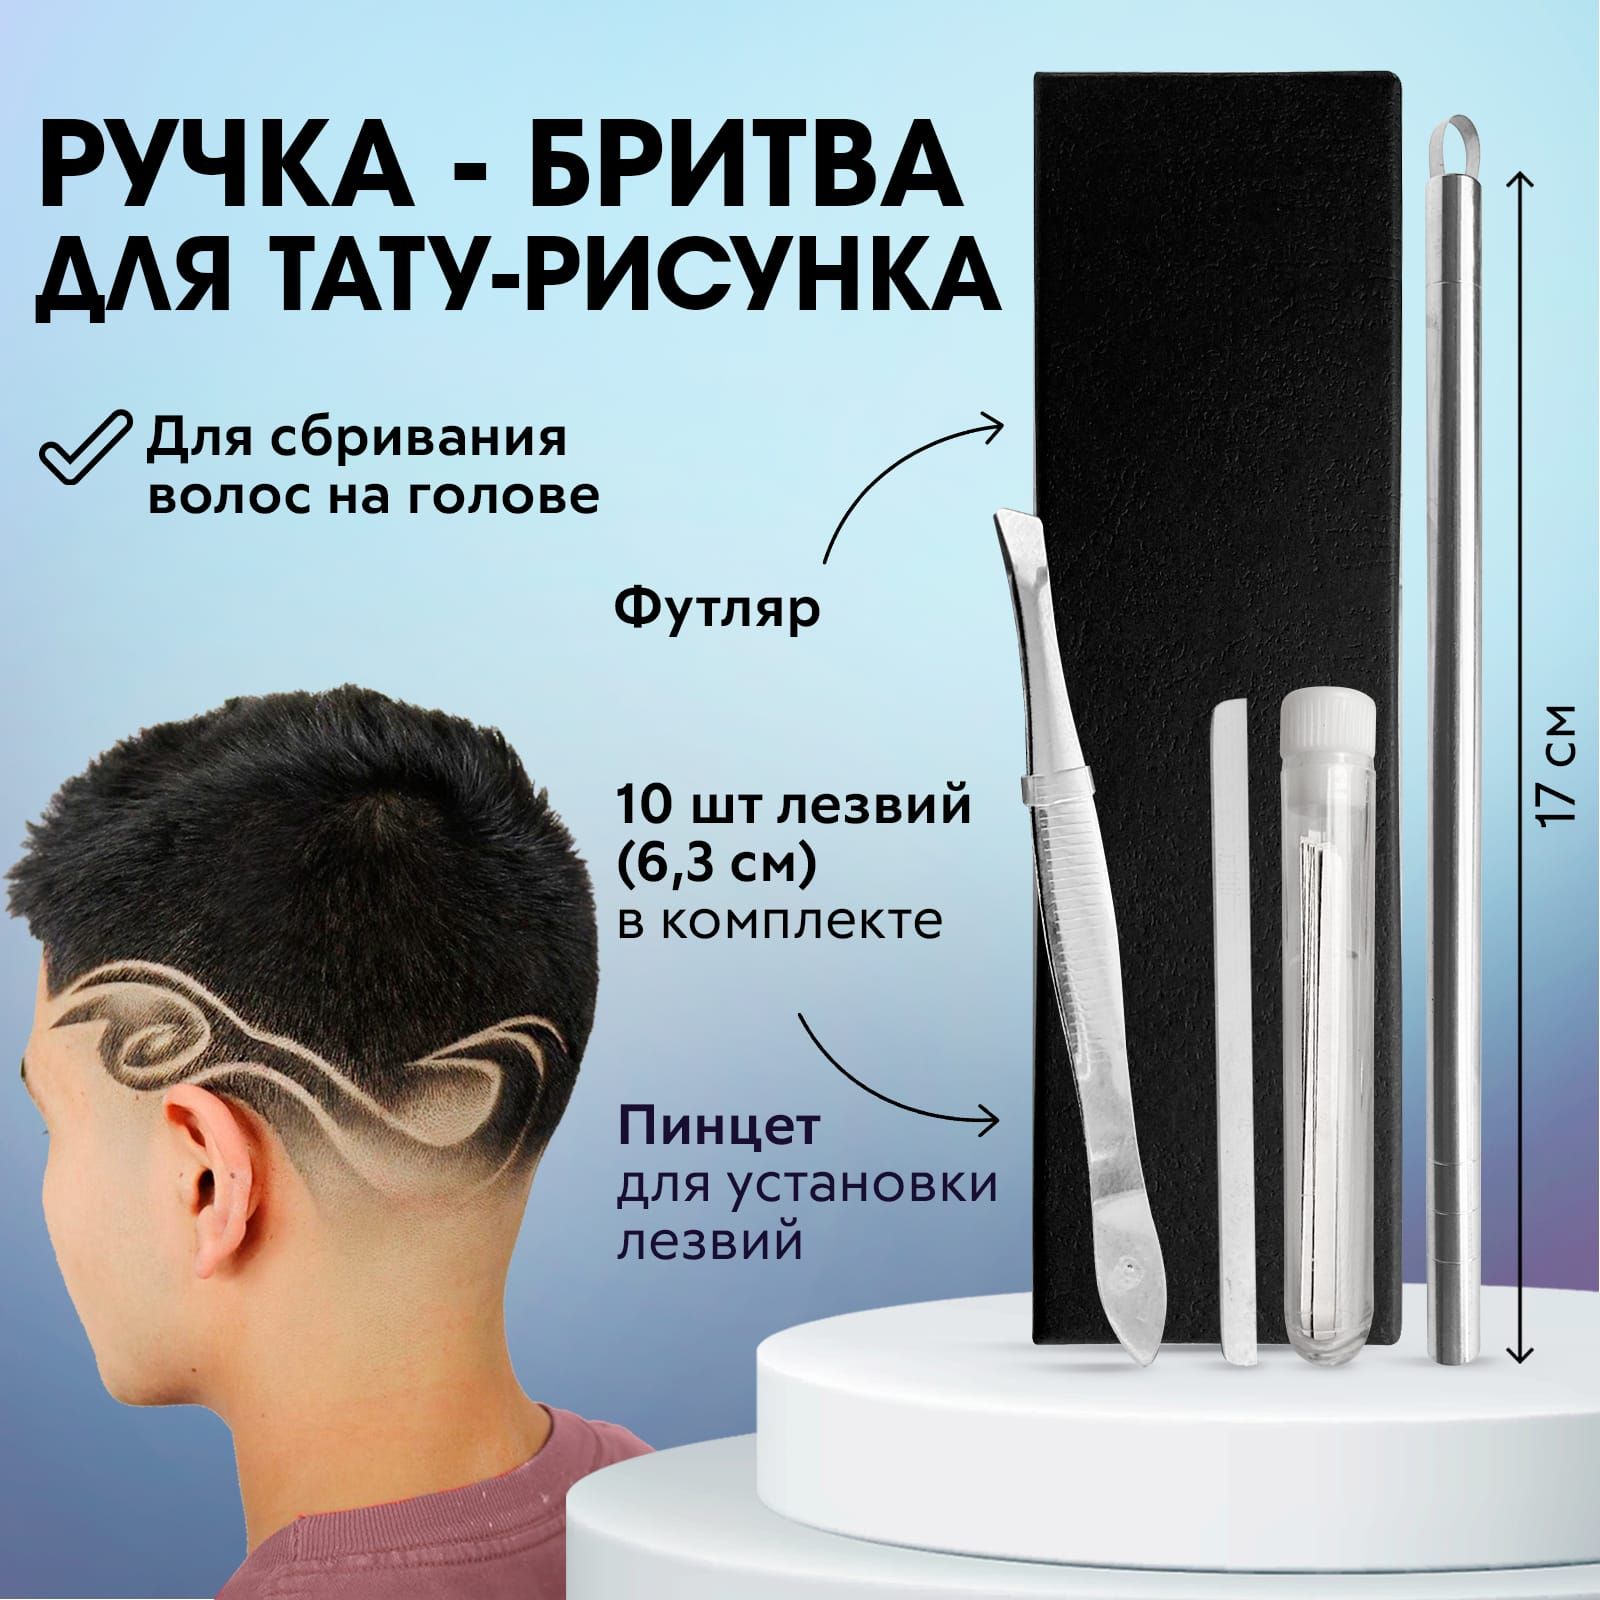 Hair tattoo в Москве цена Хаир Тату в салоне Dozari на Тверской